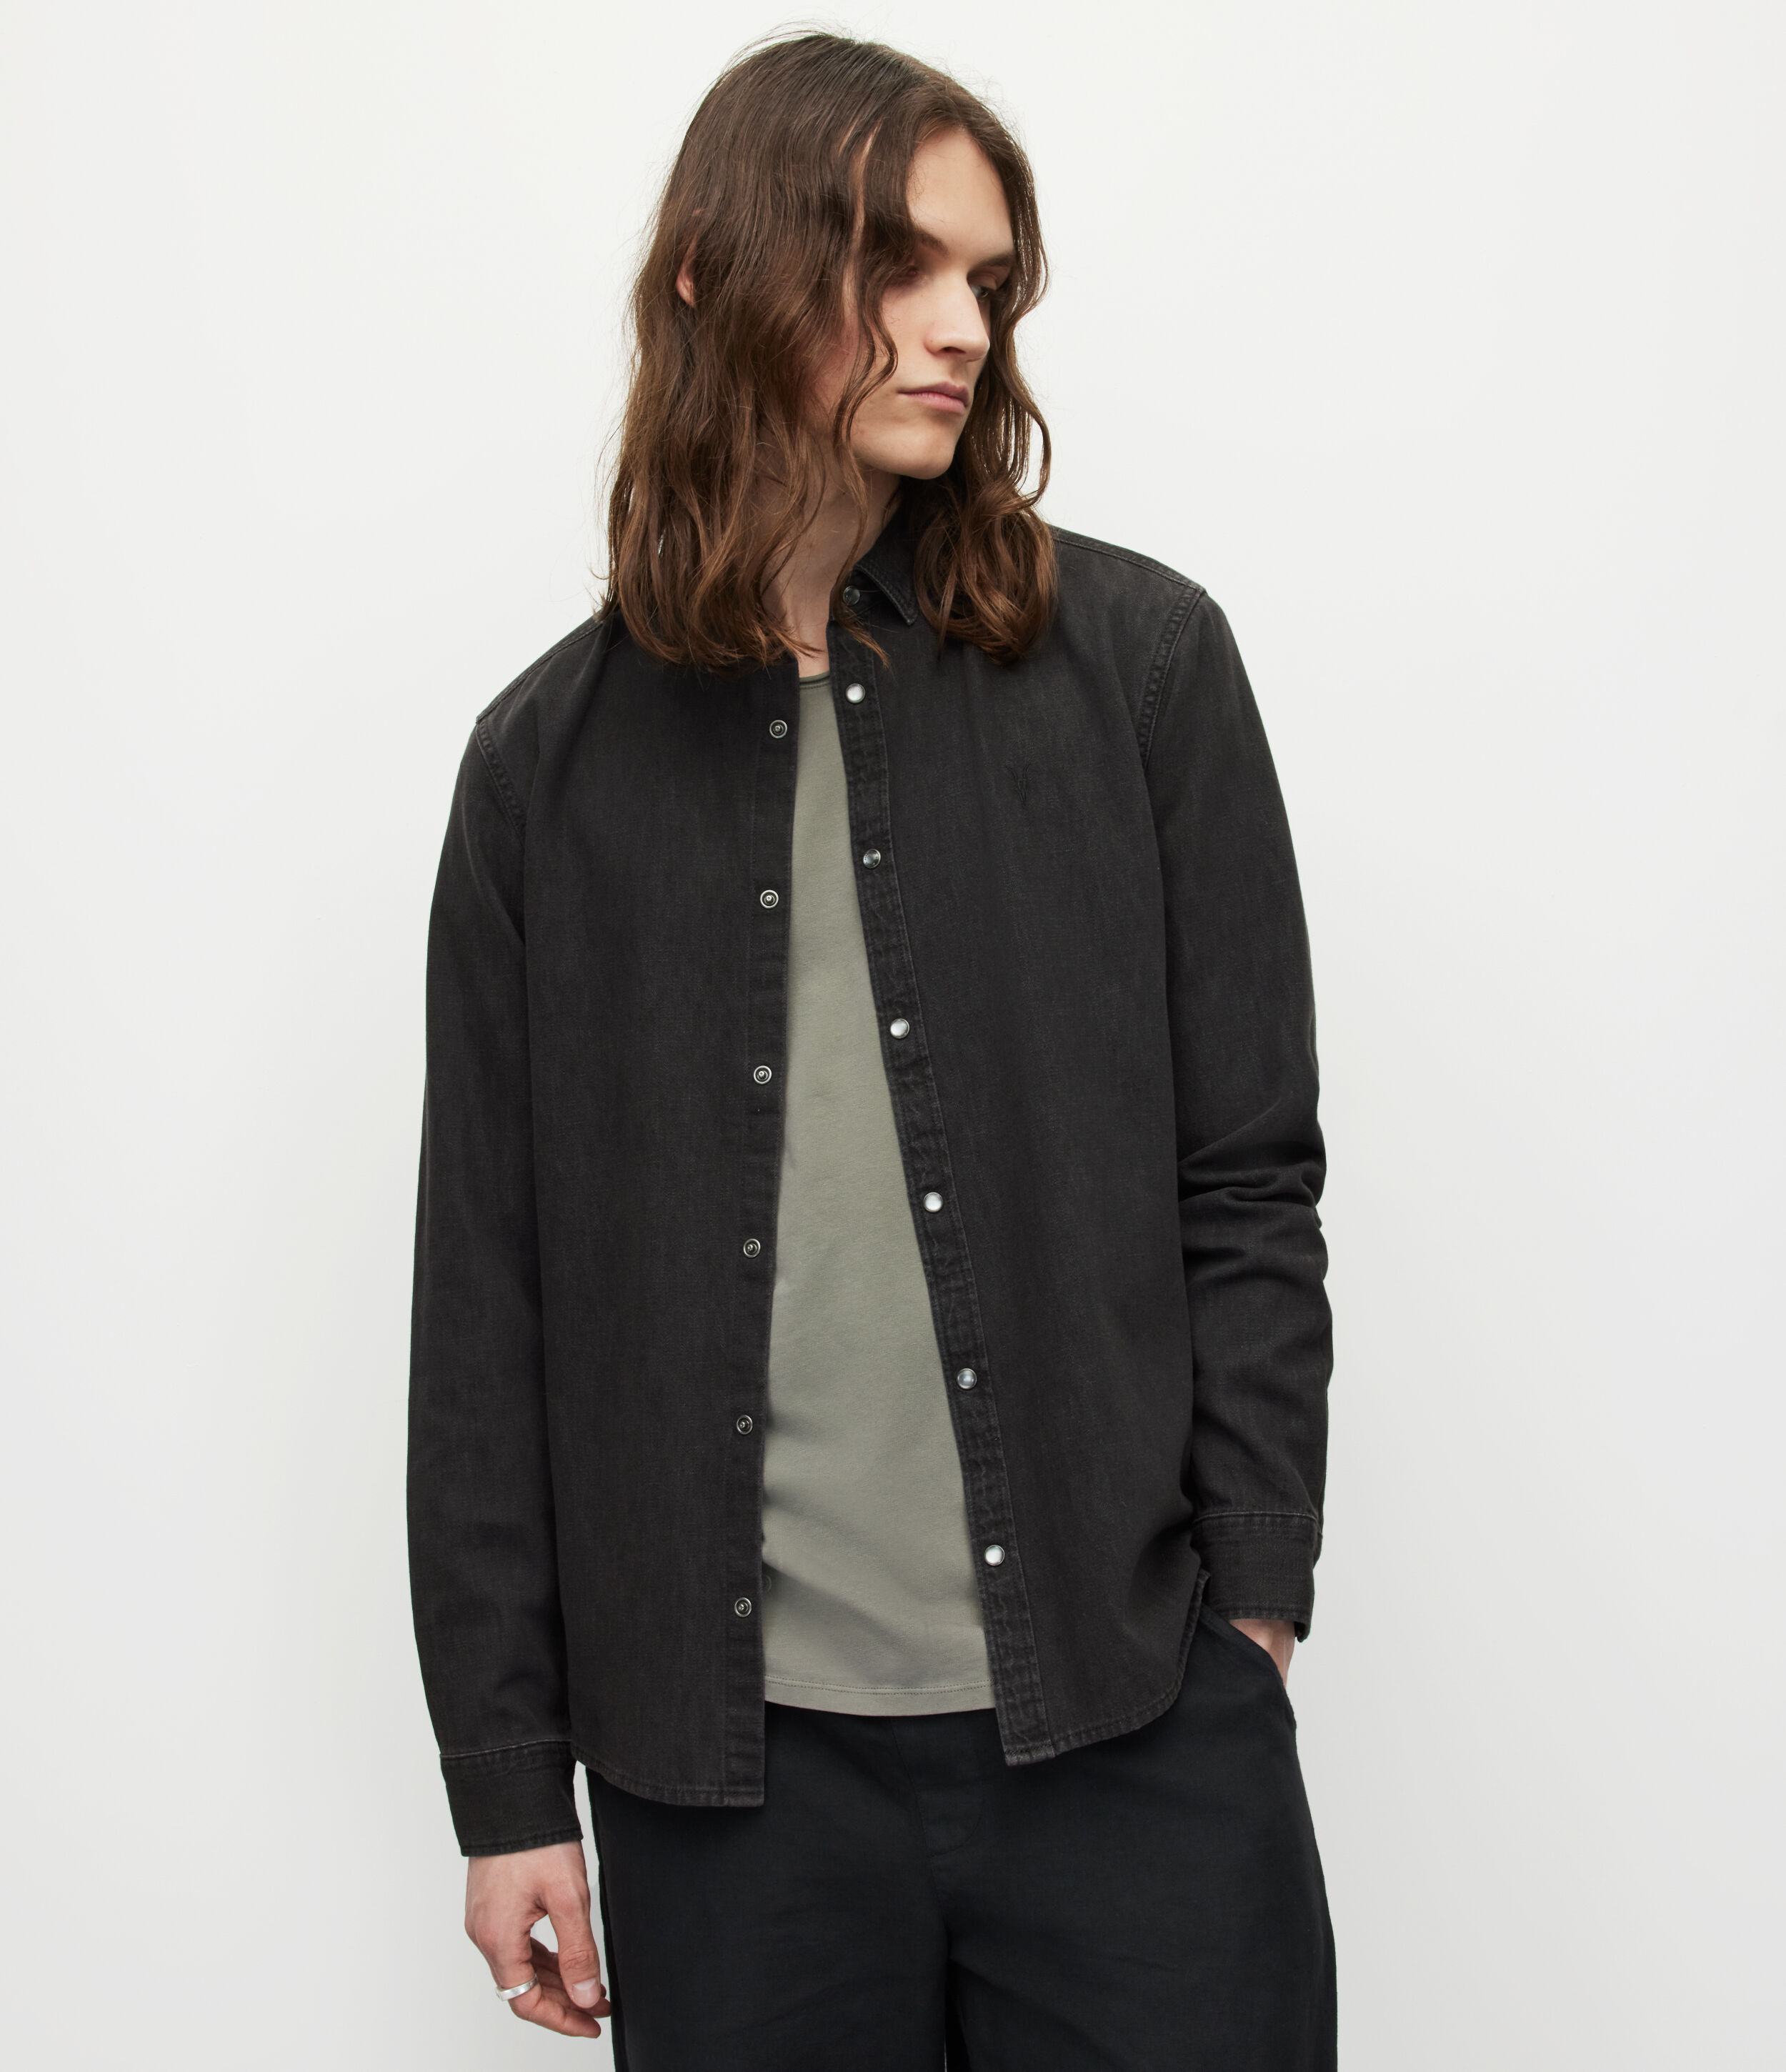 AllSaints Men’s Cotton Gleason Denim Shirt, Black, Size: M, Black